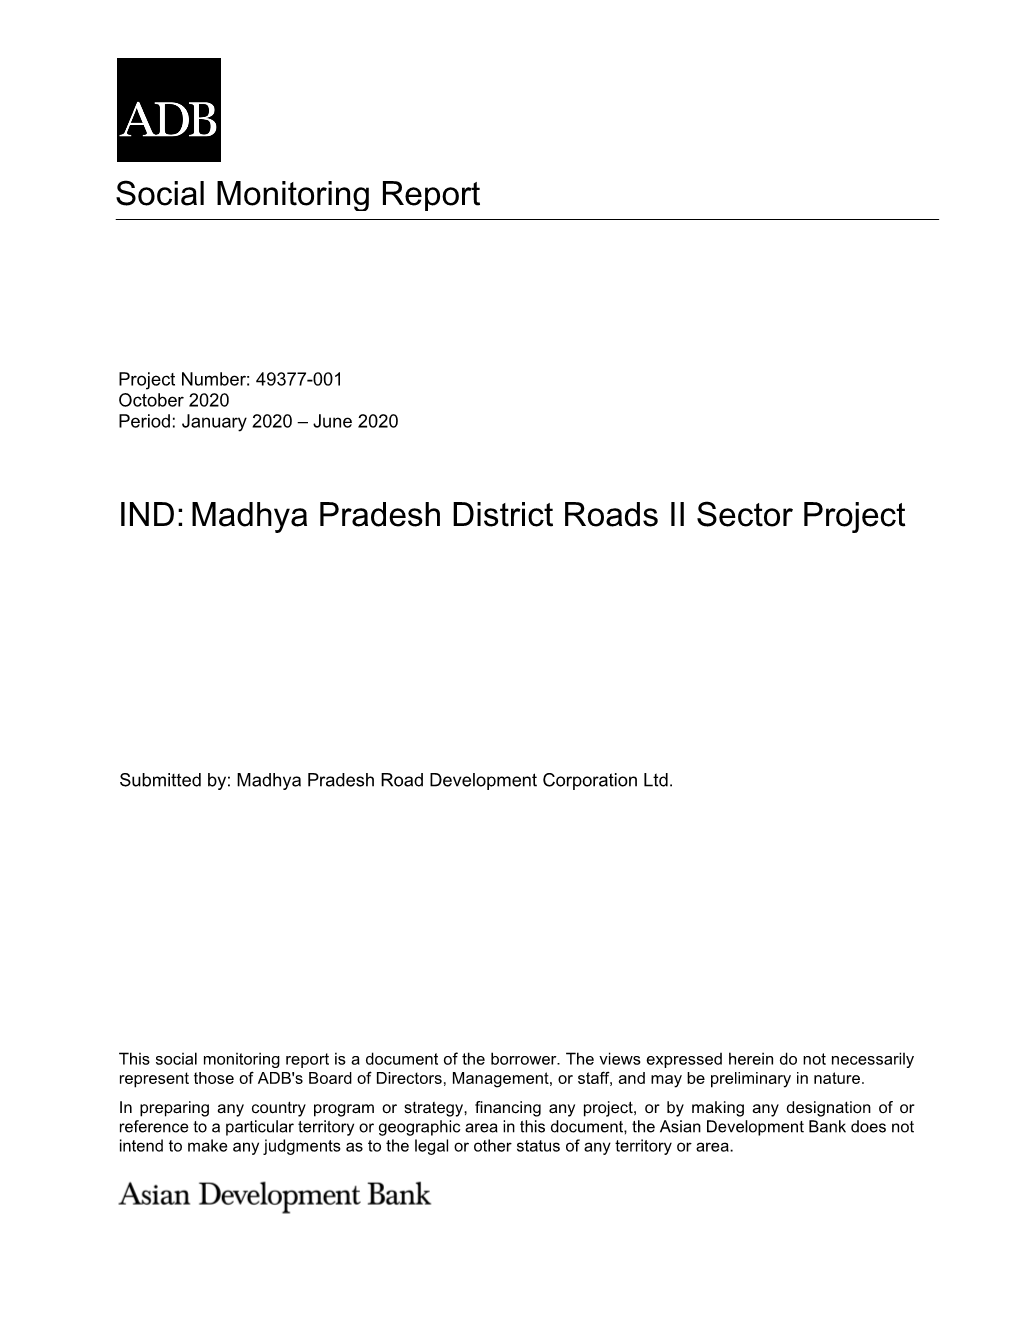 Social Monitoring Report IND:Madhya Pradesh District Roads II Sector